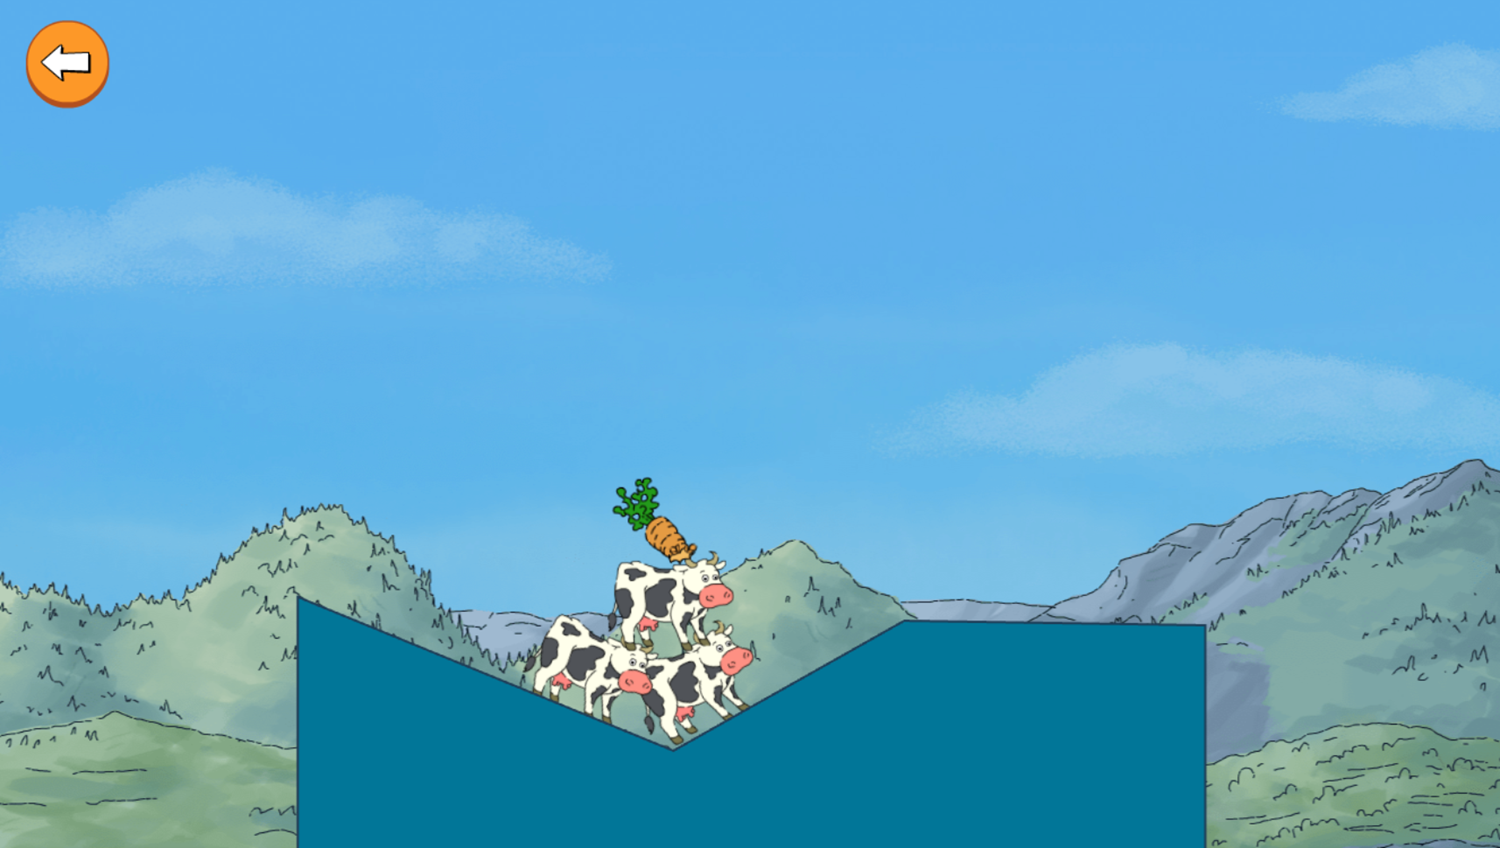 Arthur Tower of Cows Game Pile Gameplay Screenshot.